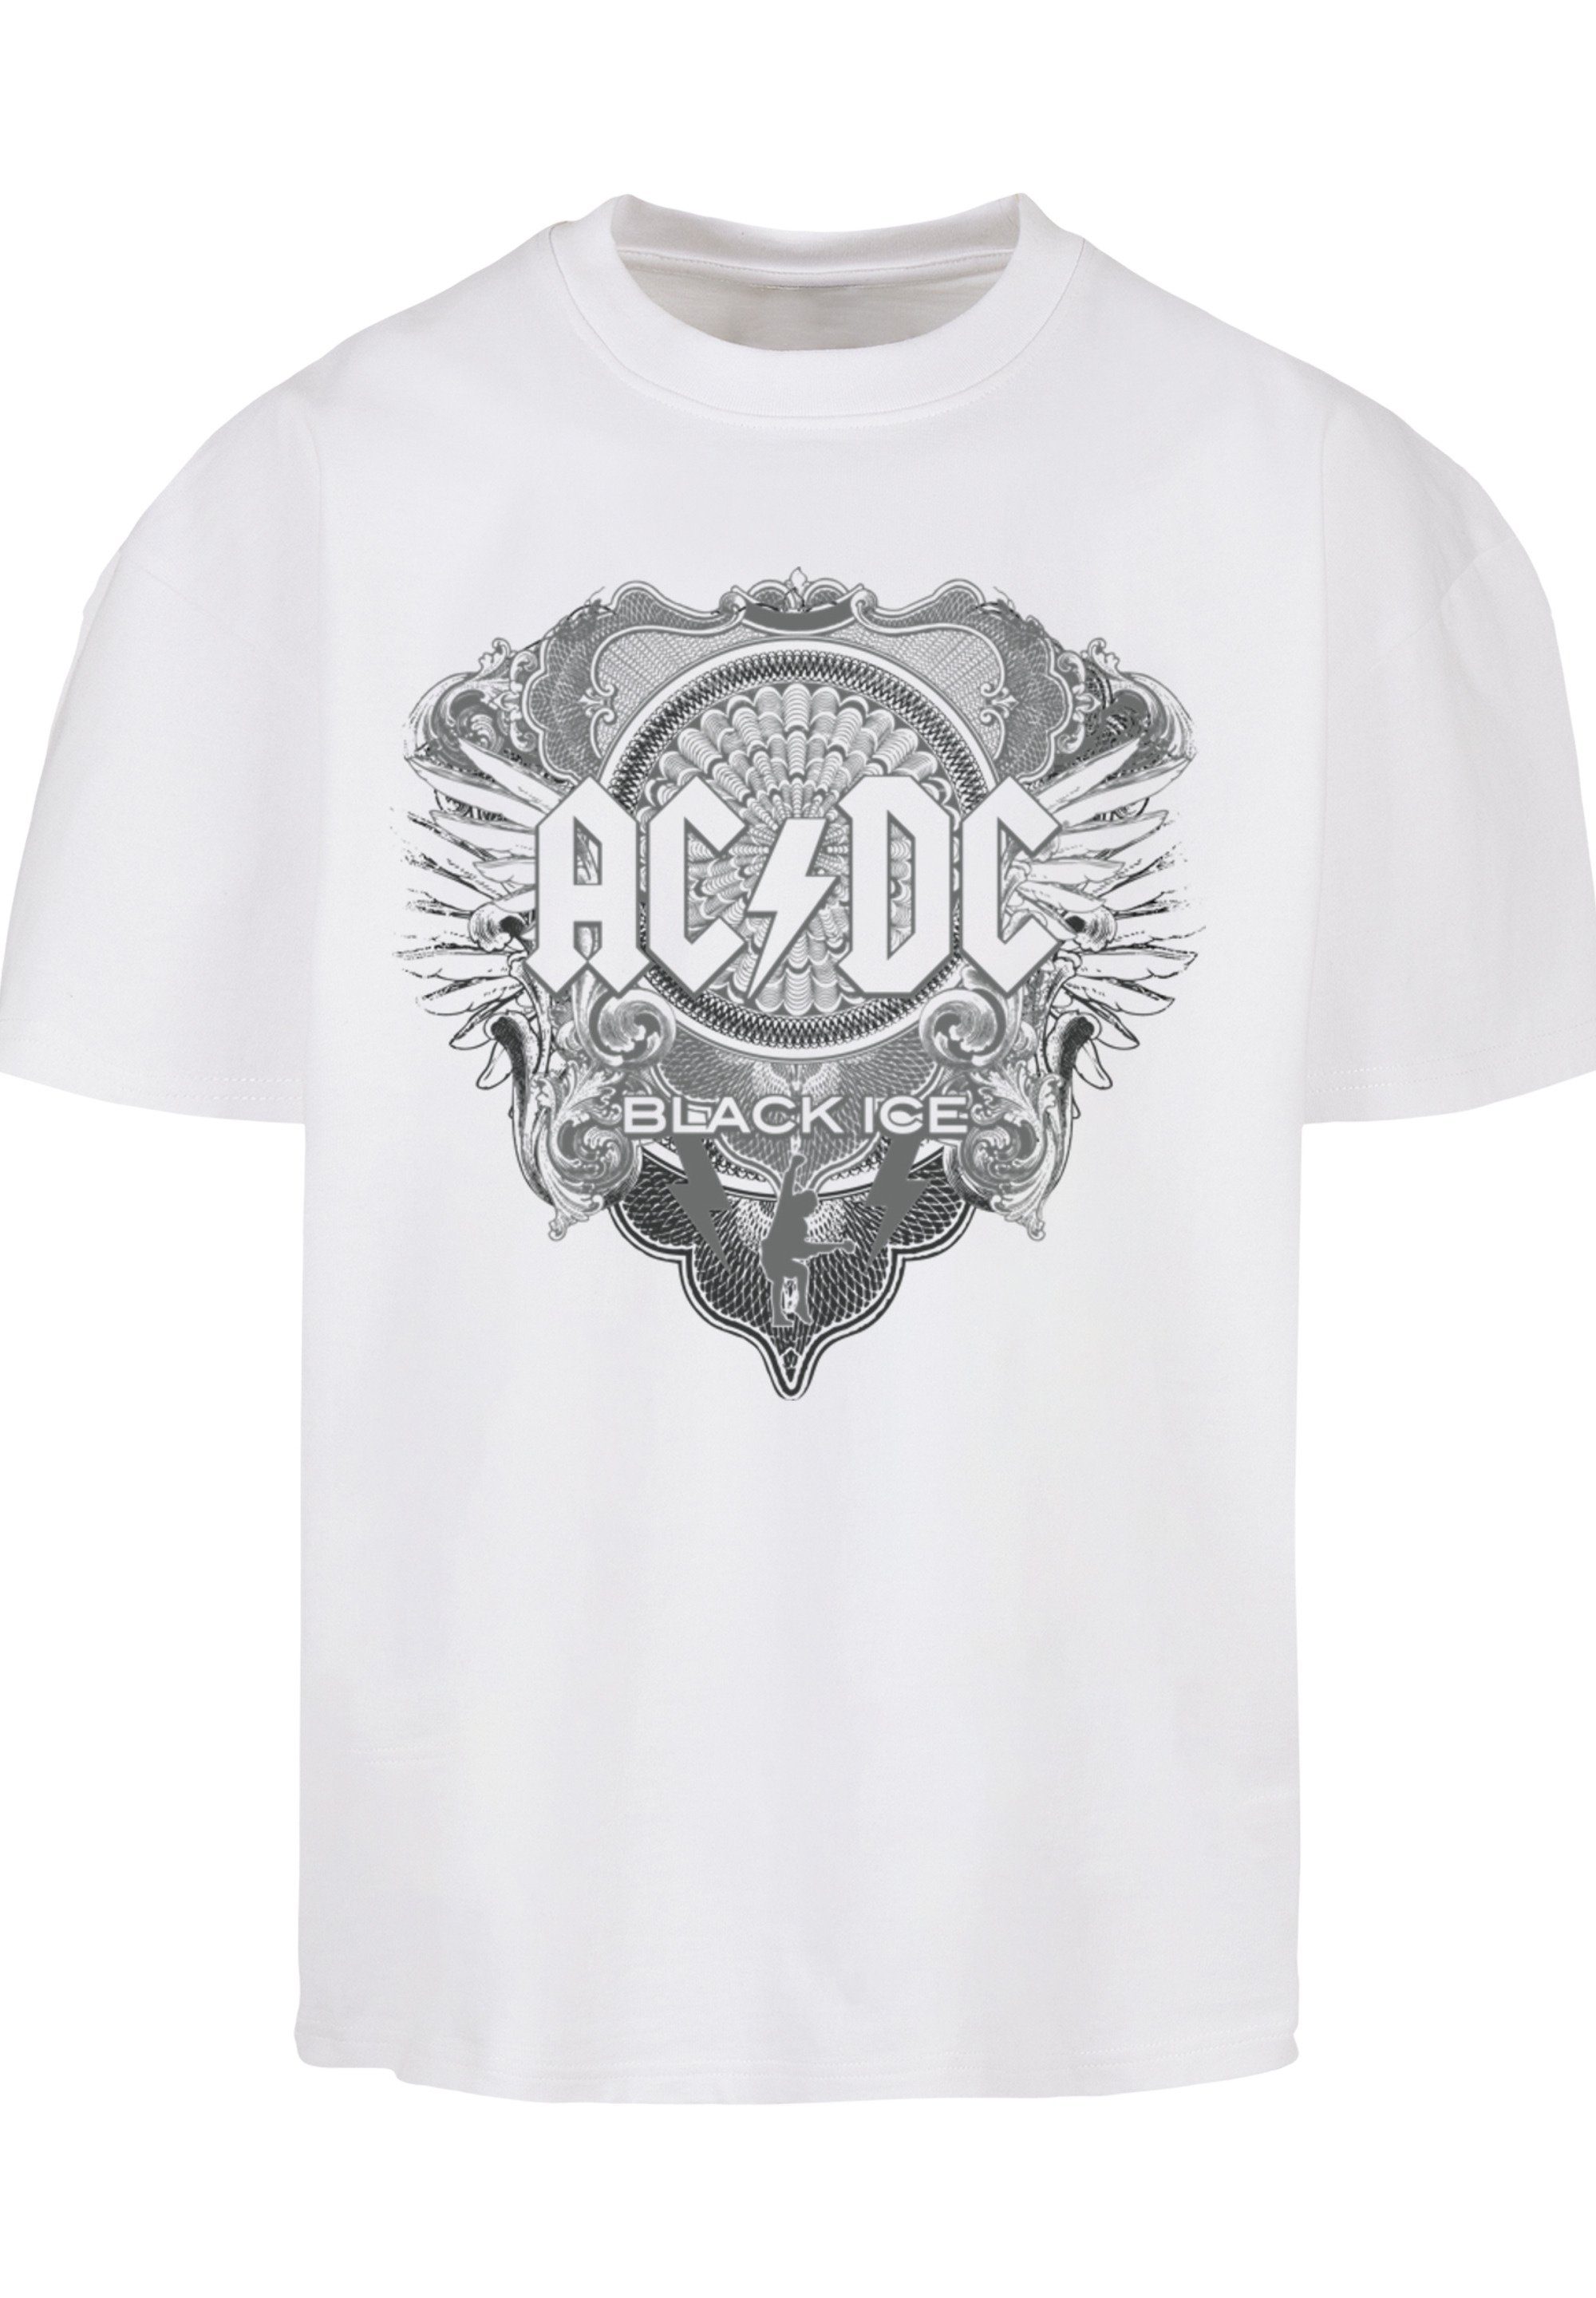 Herren Shirts F4NT4STIC T-Shirt ACDC Black Ice - Rock Music Band Album